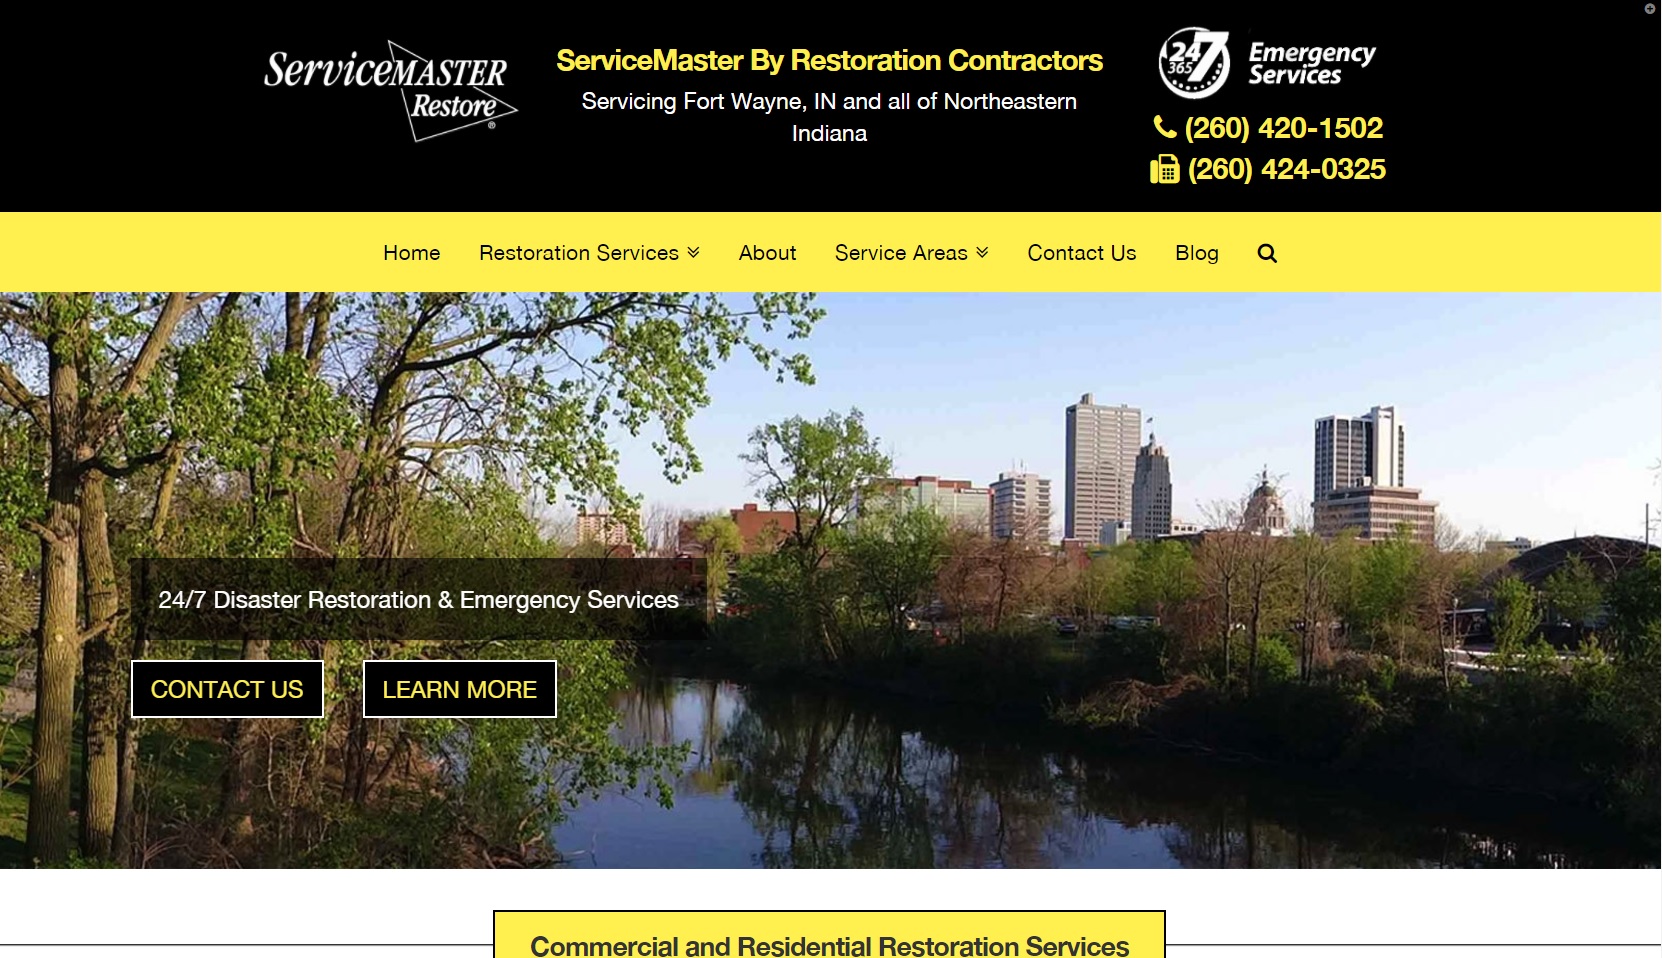 ServiceMaster by Restoration Contractors Case Study